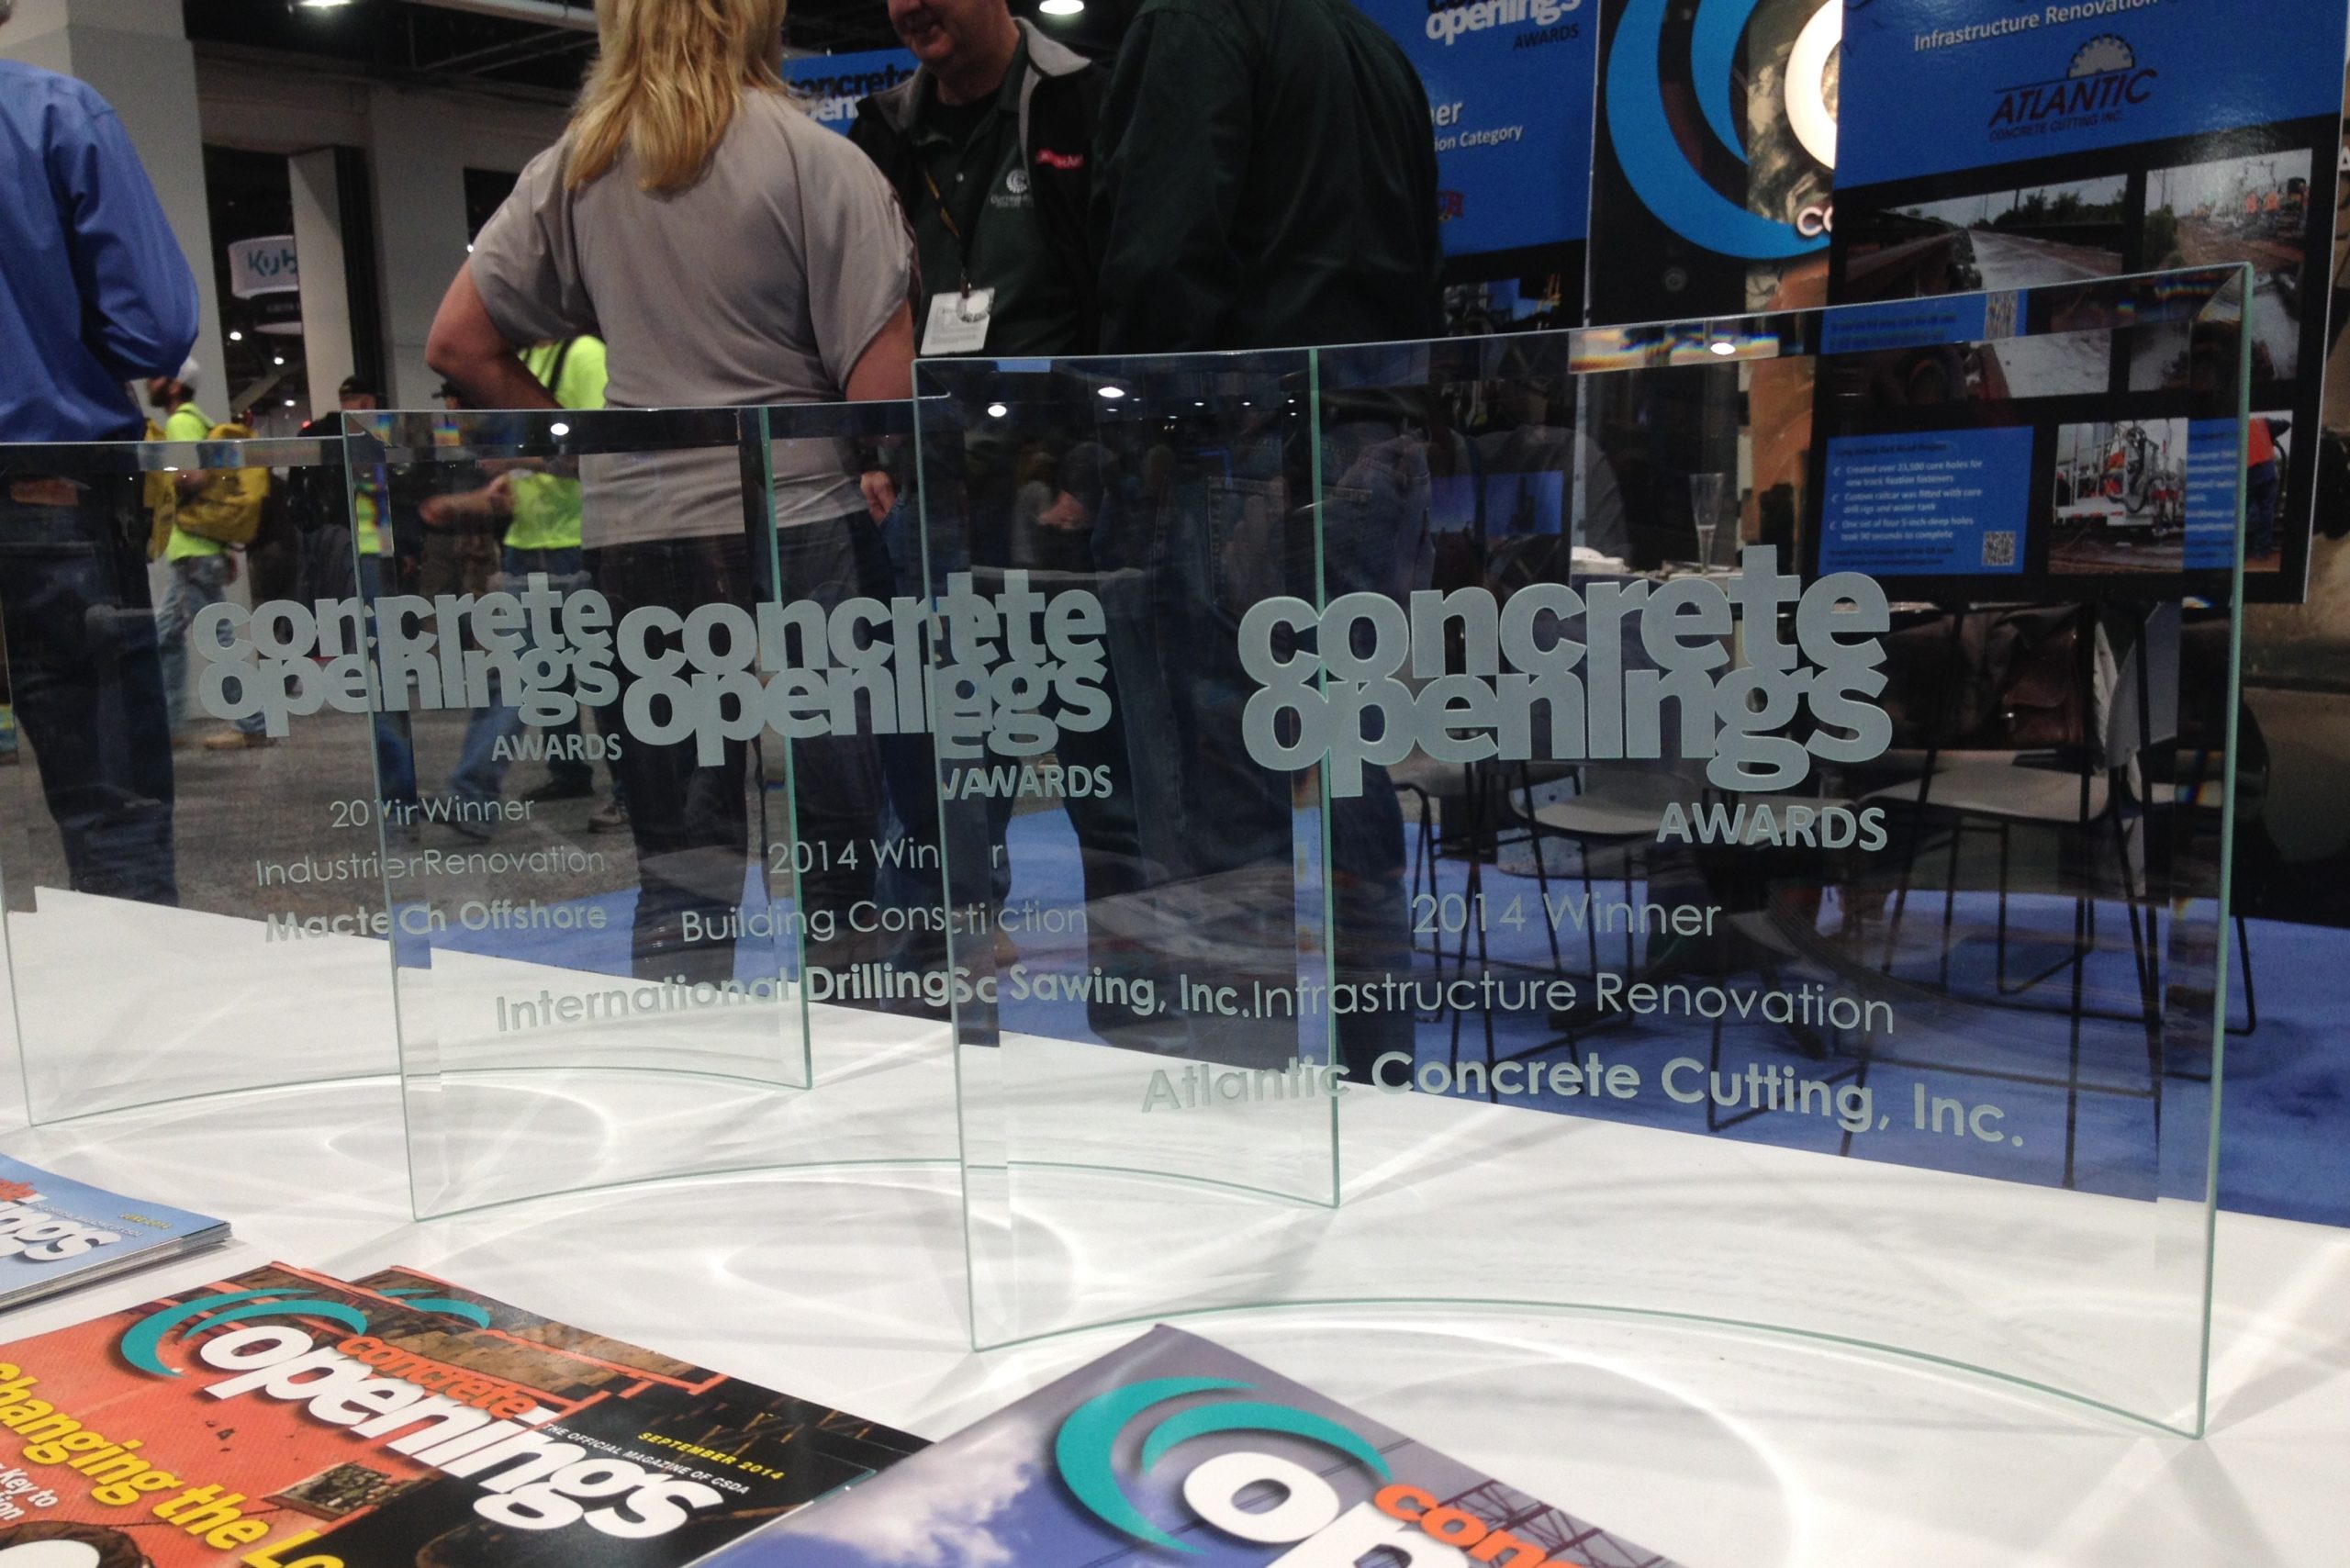 Concrete Openings Awards Ceremony